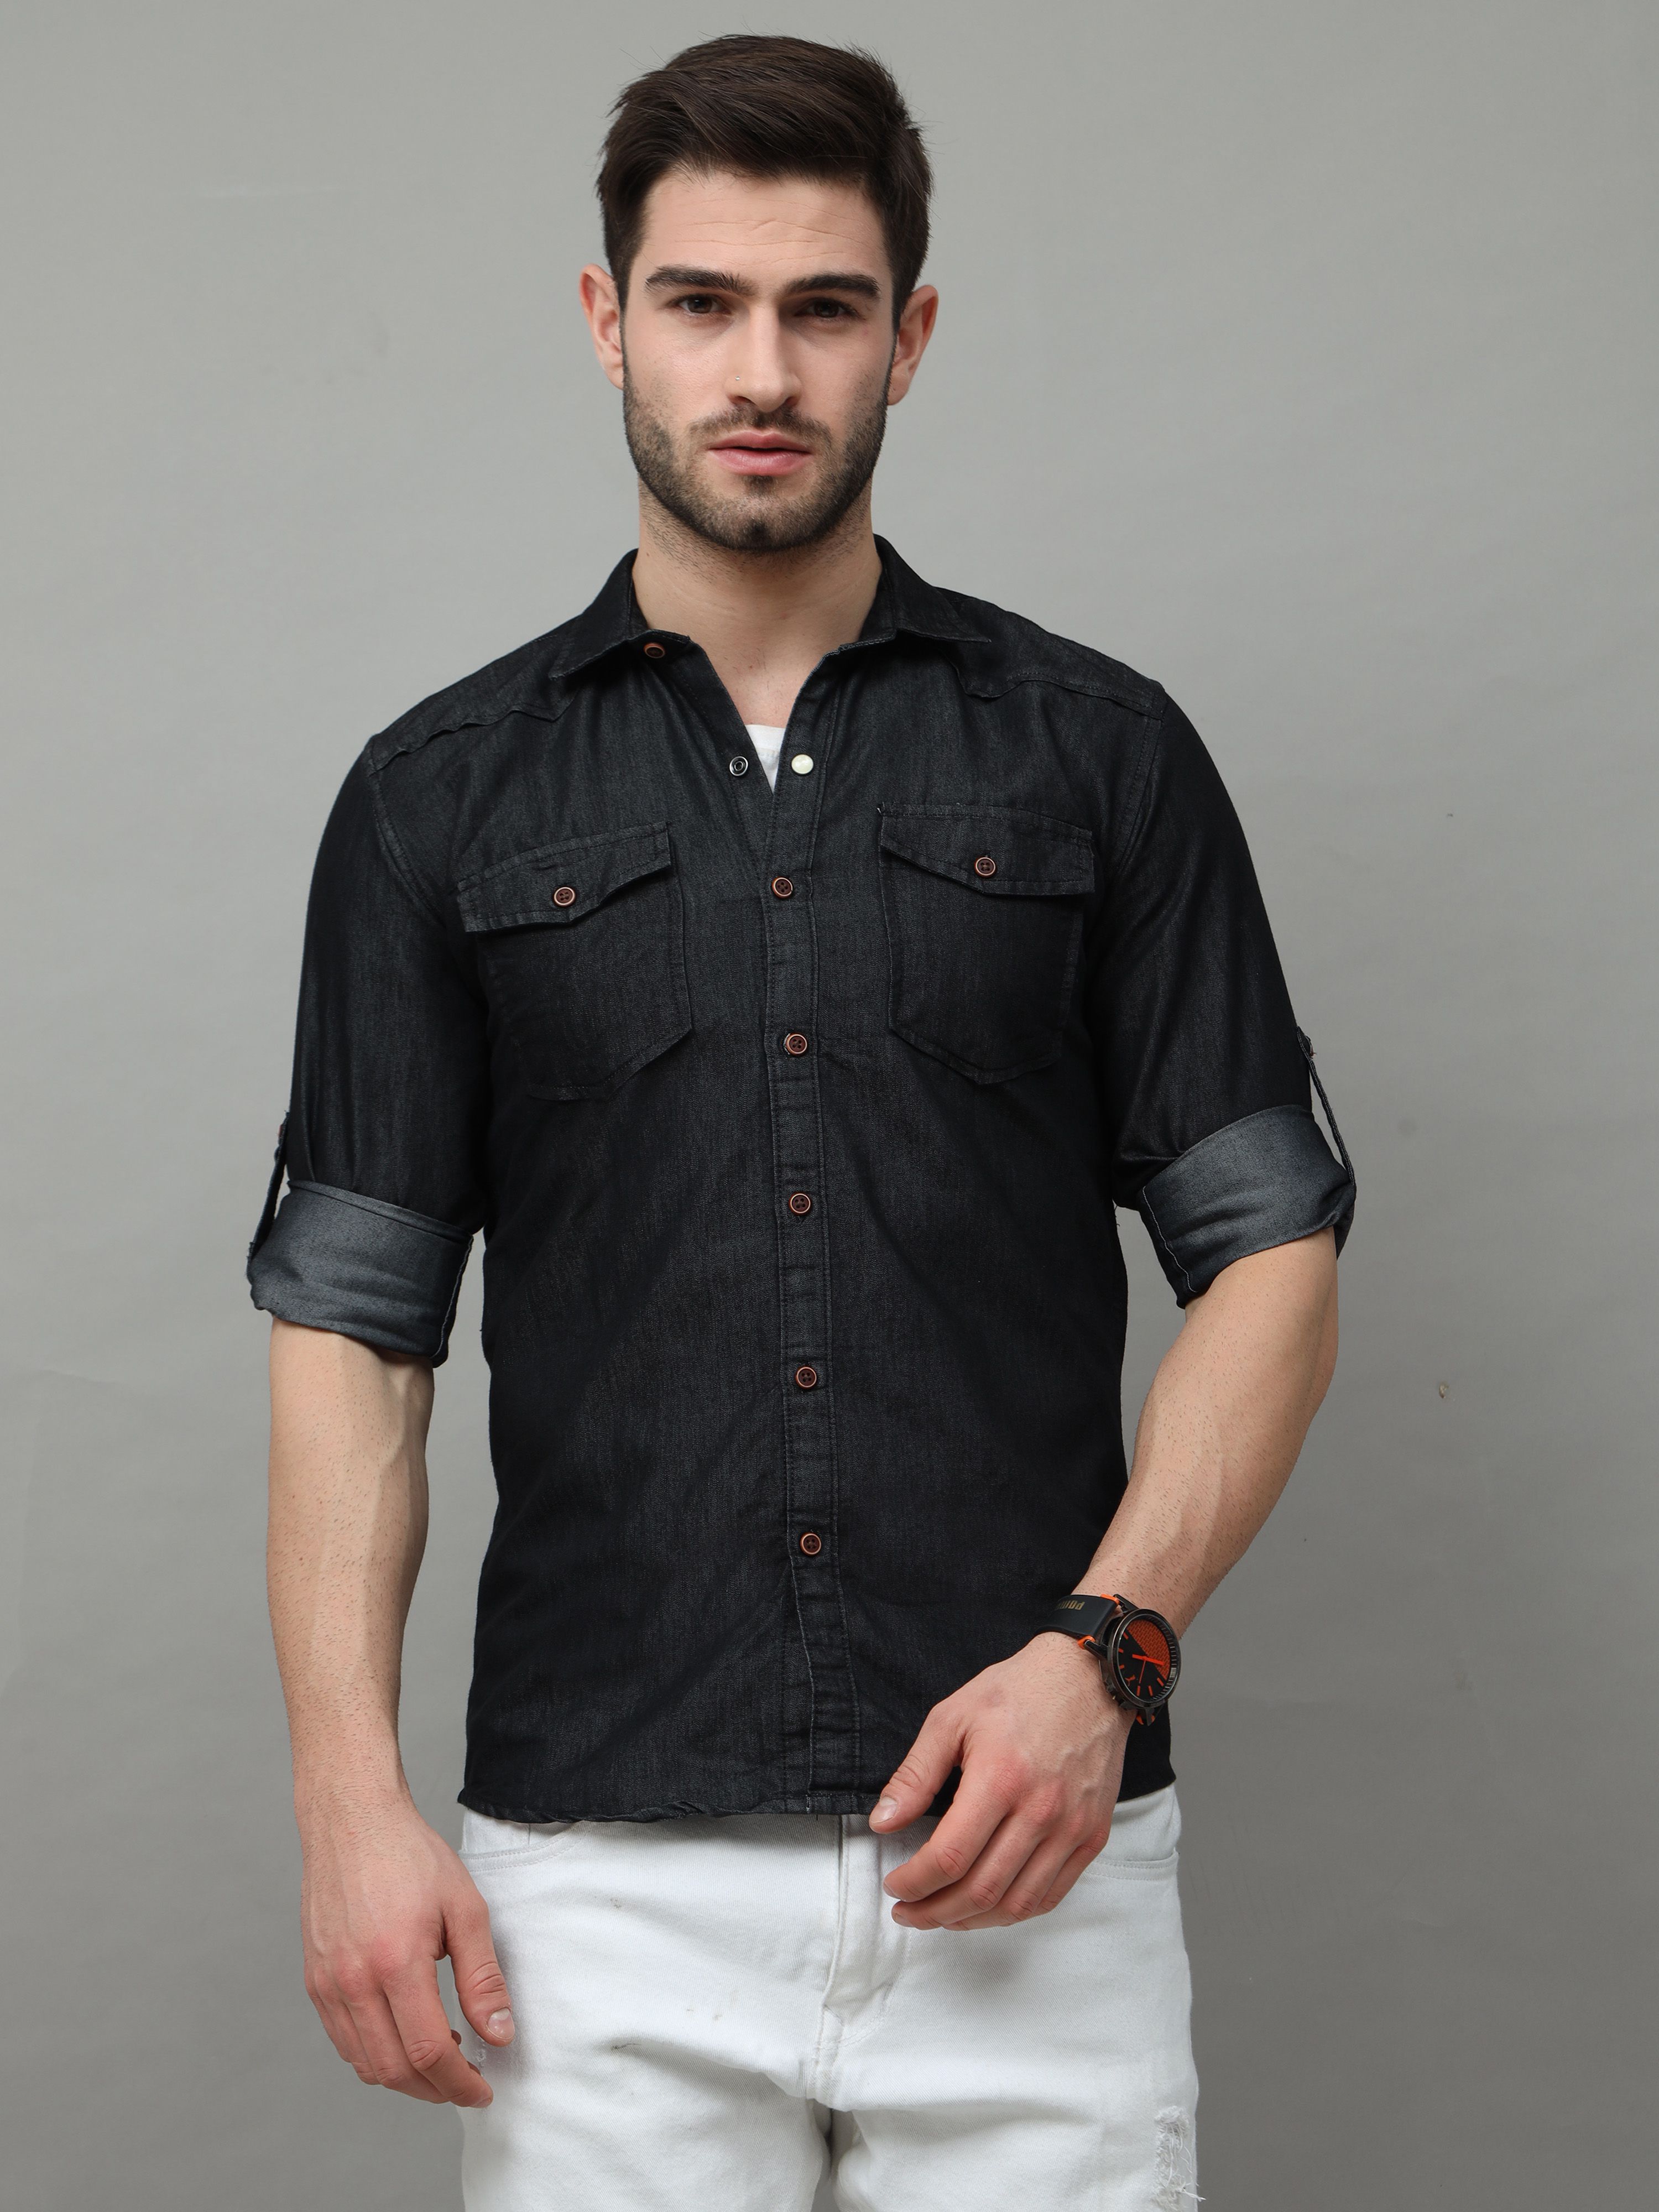     			VROJASS Denim Regular Fit Solids Full Sleeves Men's Casual Shirt - Black ( Pack of 1 )